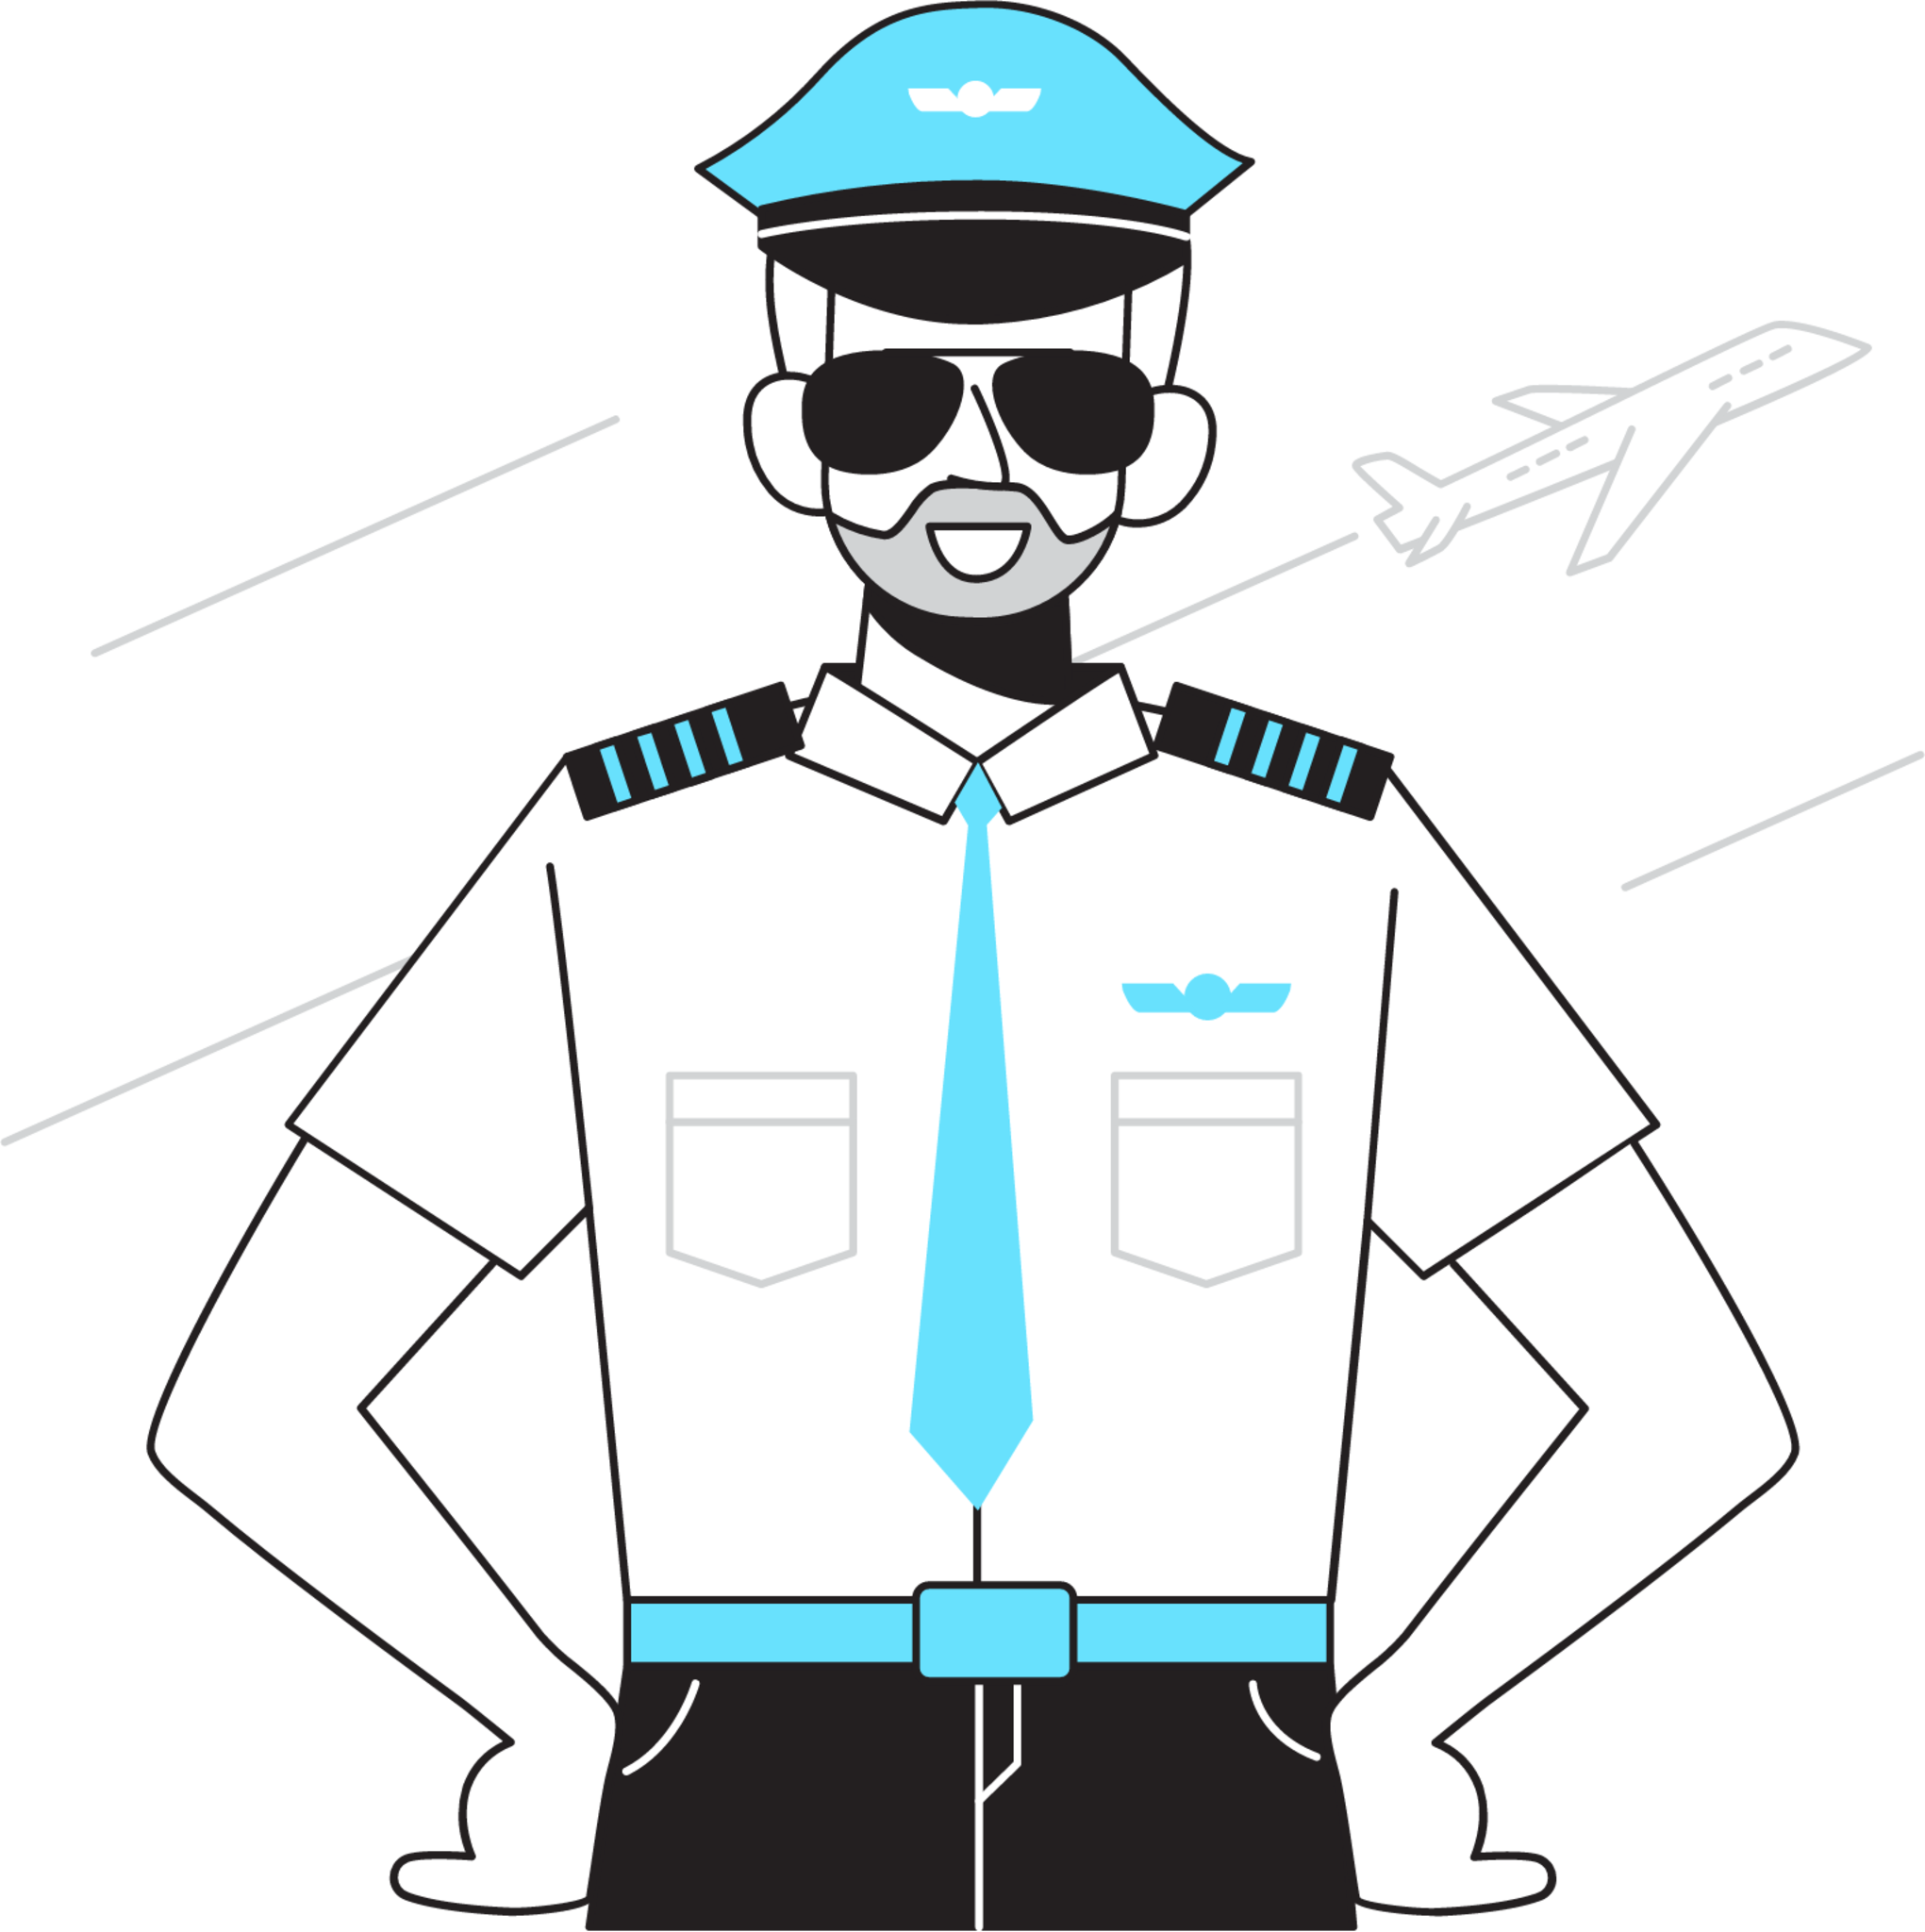 Pilot illustration